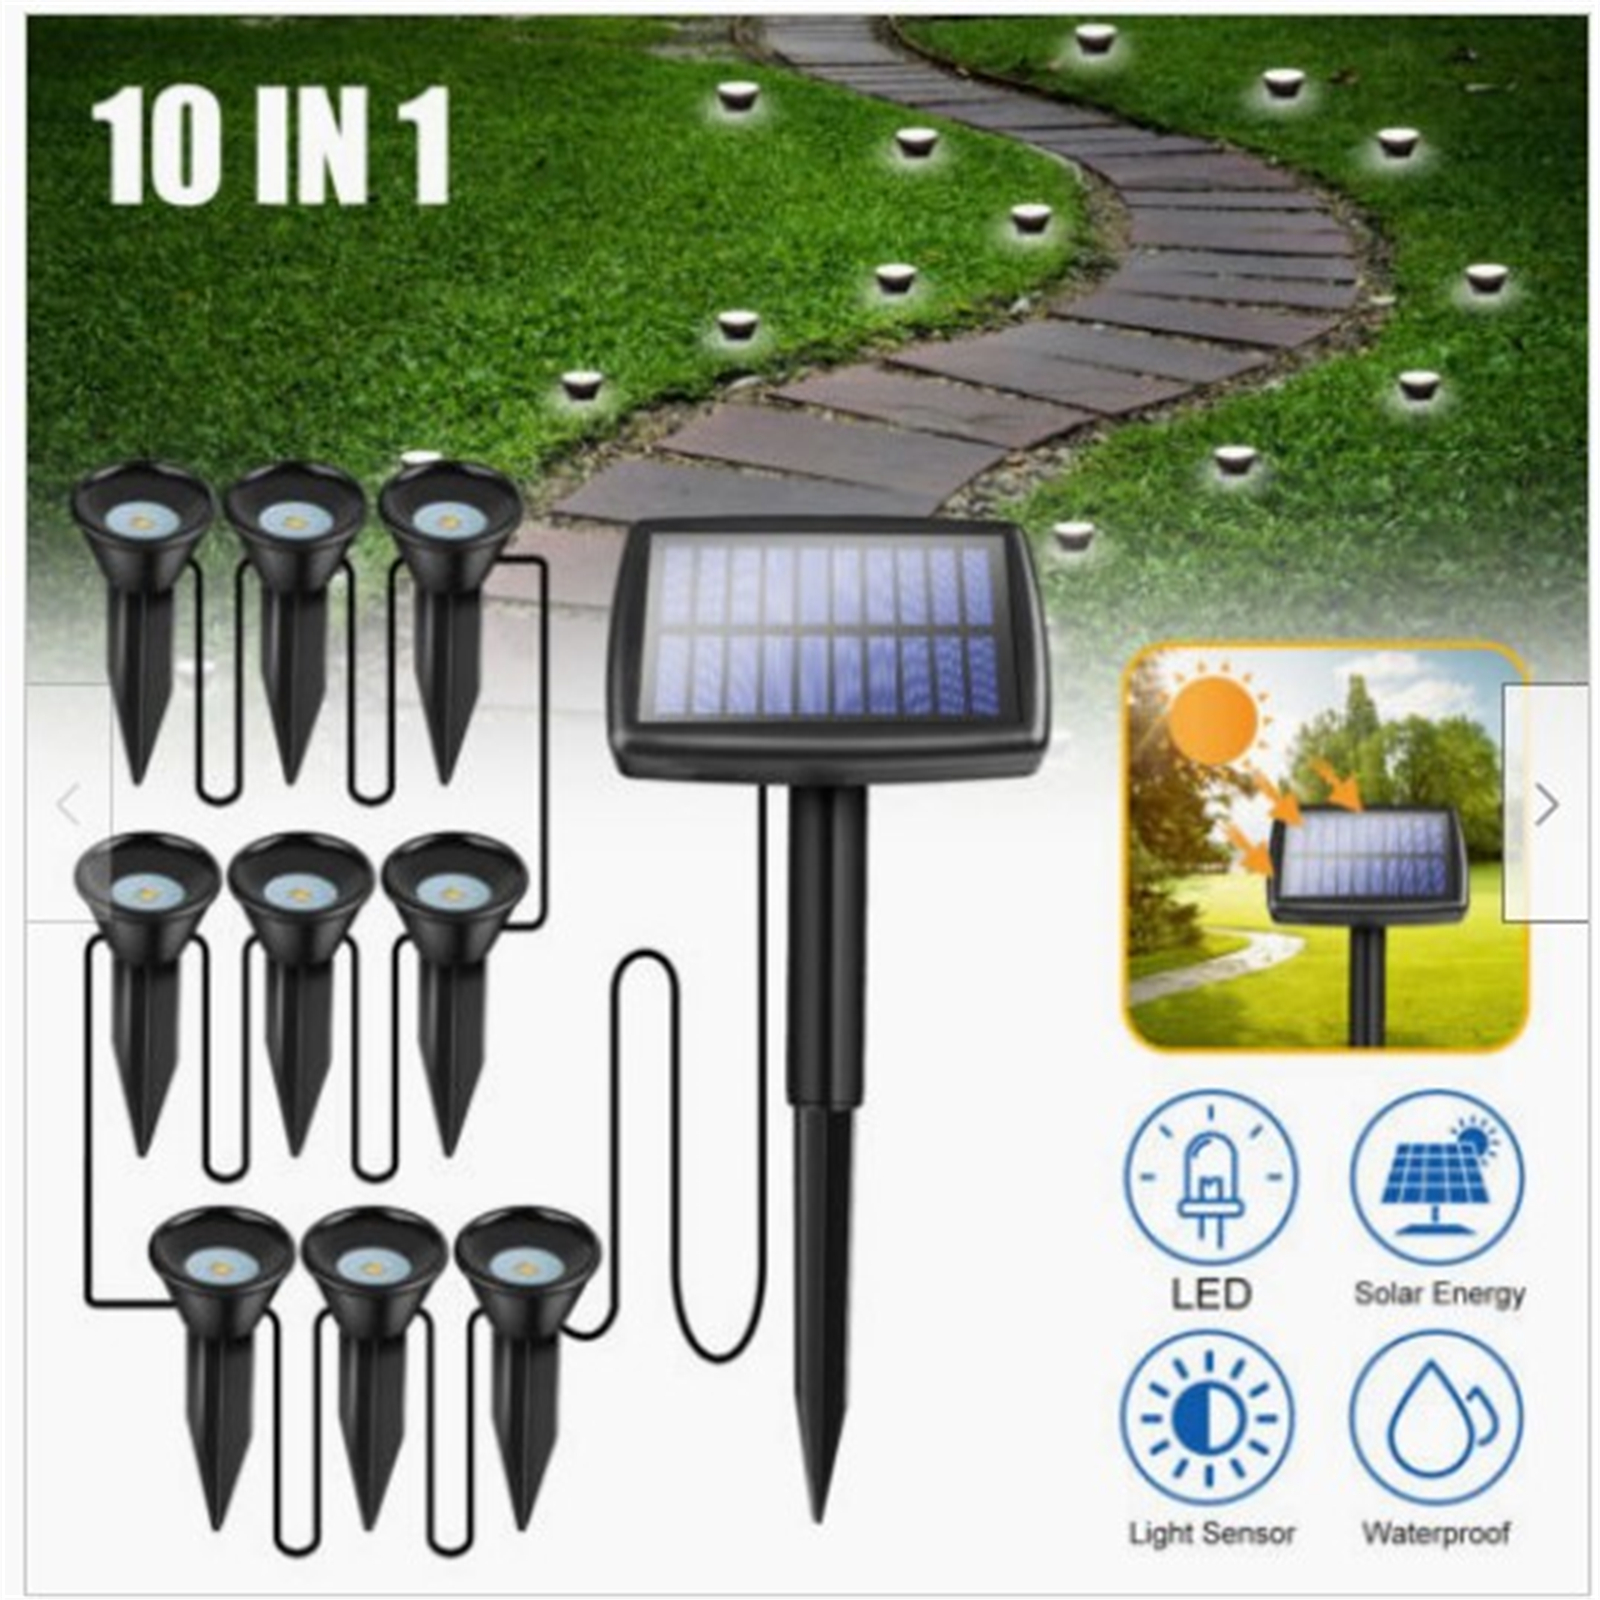 10 In 1 Solar Led Spot Light 500mah Battery Landscape Lamps For Outdoor Gardens Courtyards Lawns Decor